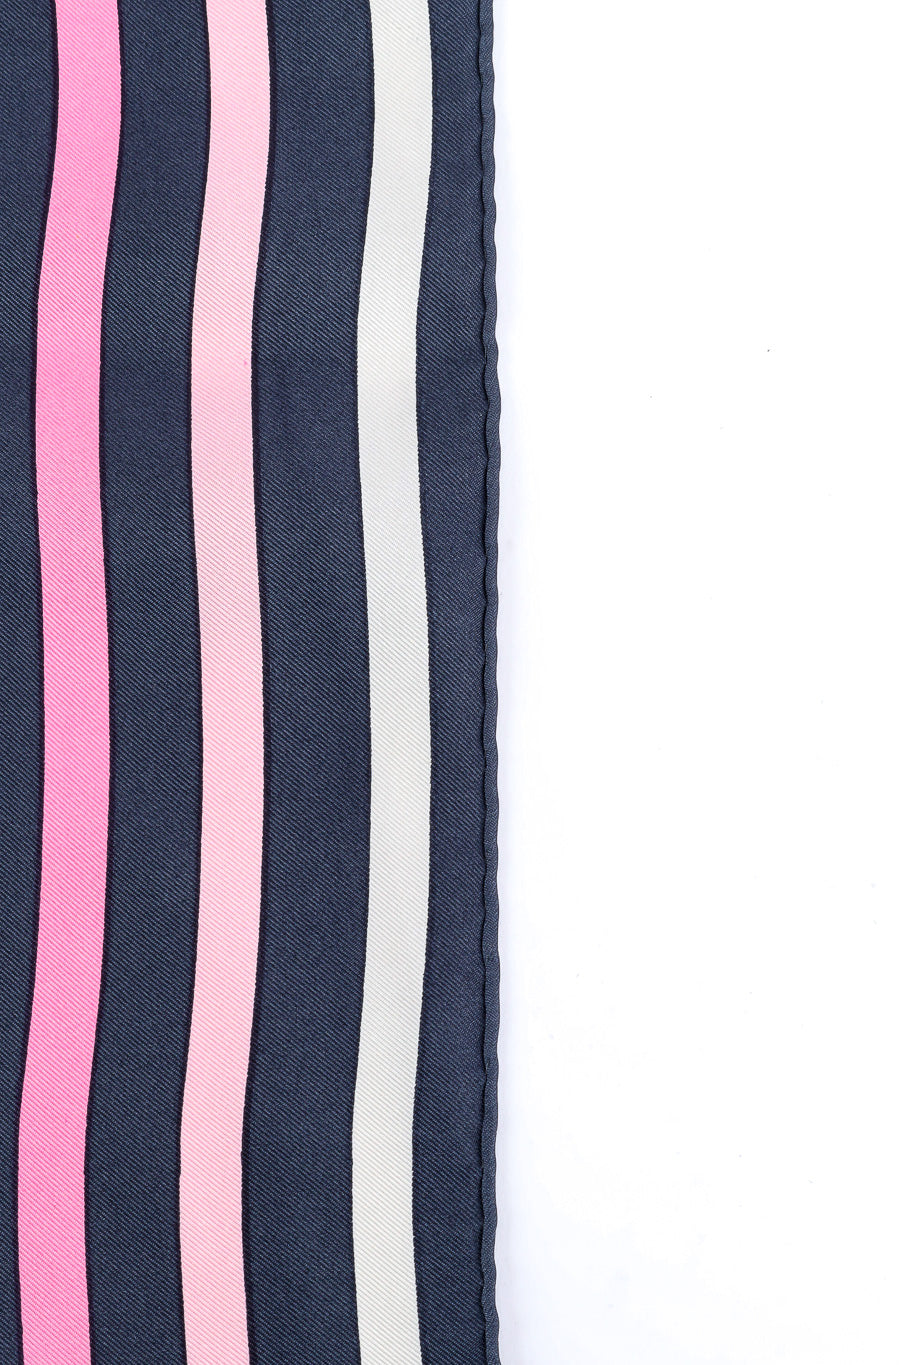 Tetris print scarf by Givenchy closeup of hem line @recessla